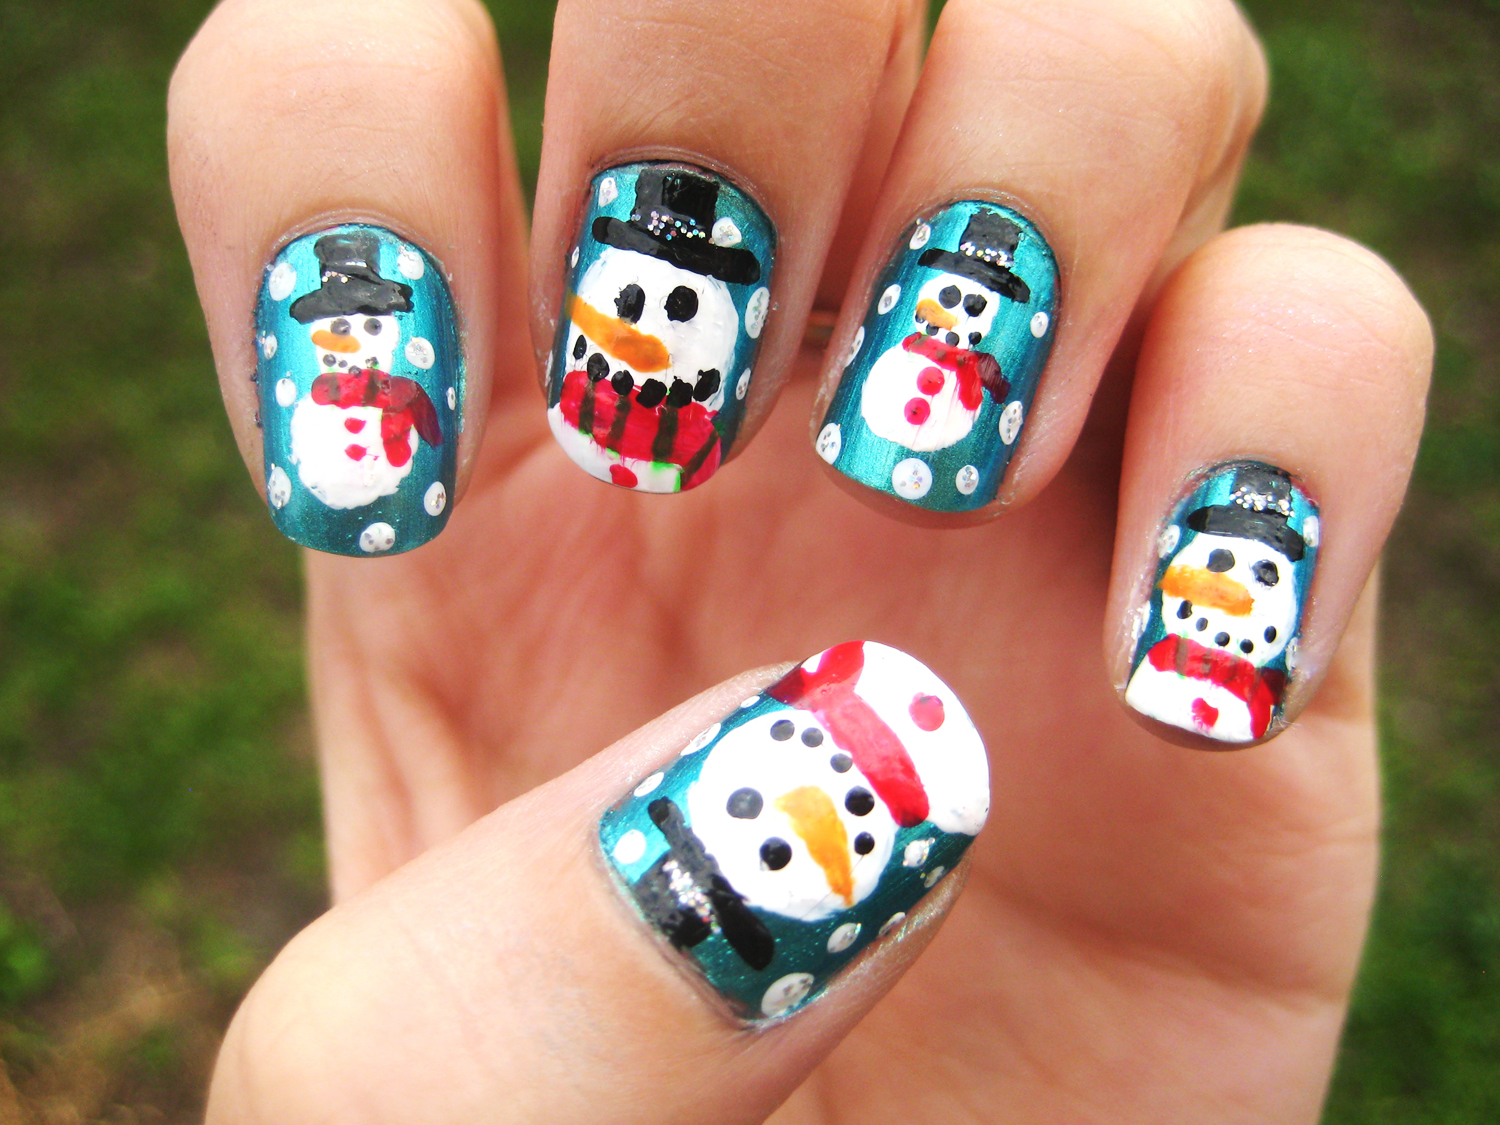 Cute Snowman Nail Designs To Copy This Winter - fashionsy.com